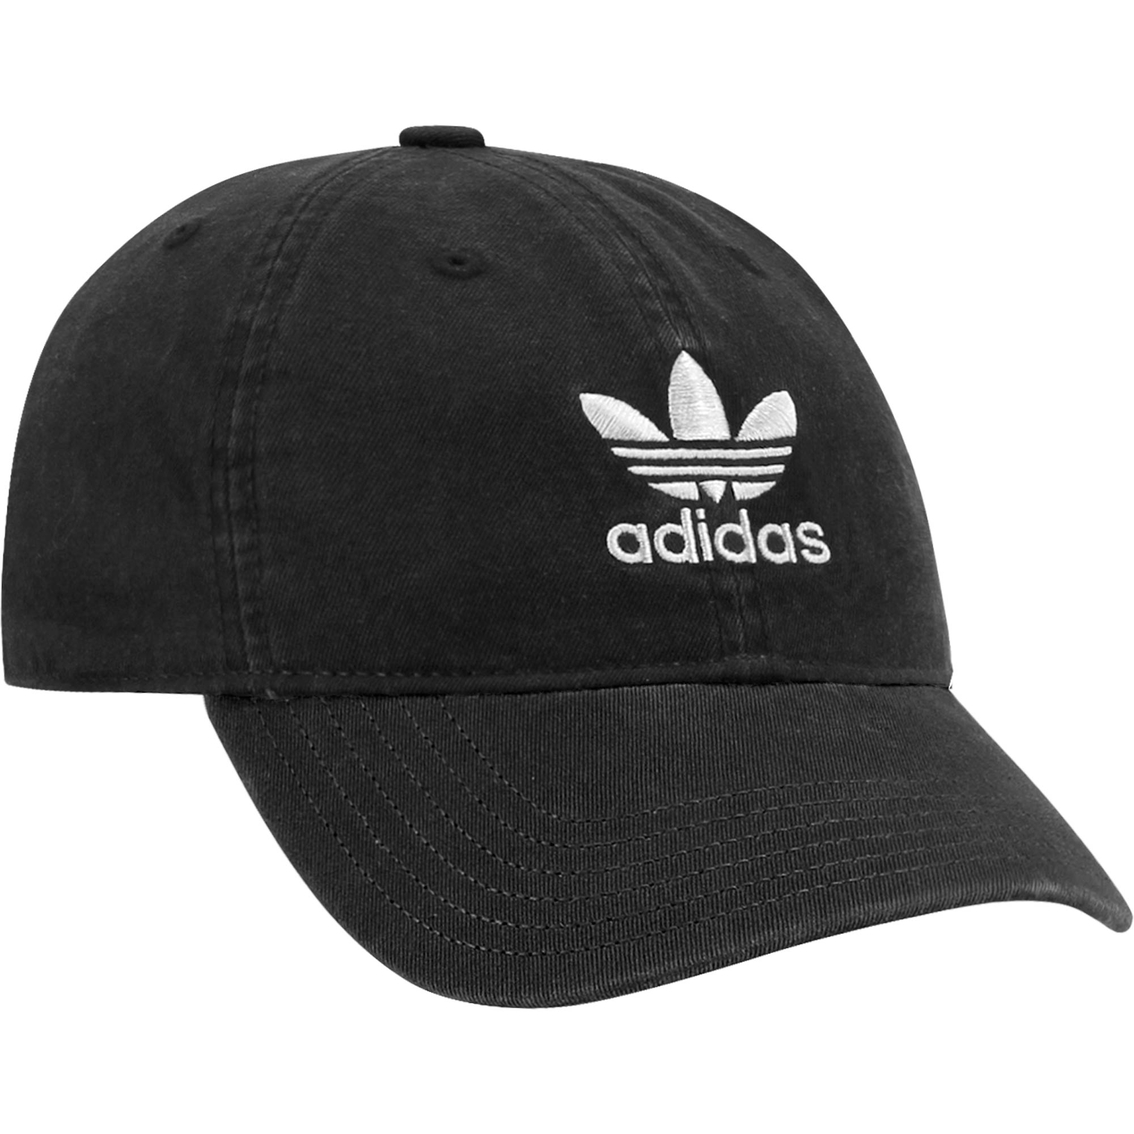 Adidas Originals Relaxed Strapback Cap - Image 2 of 3